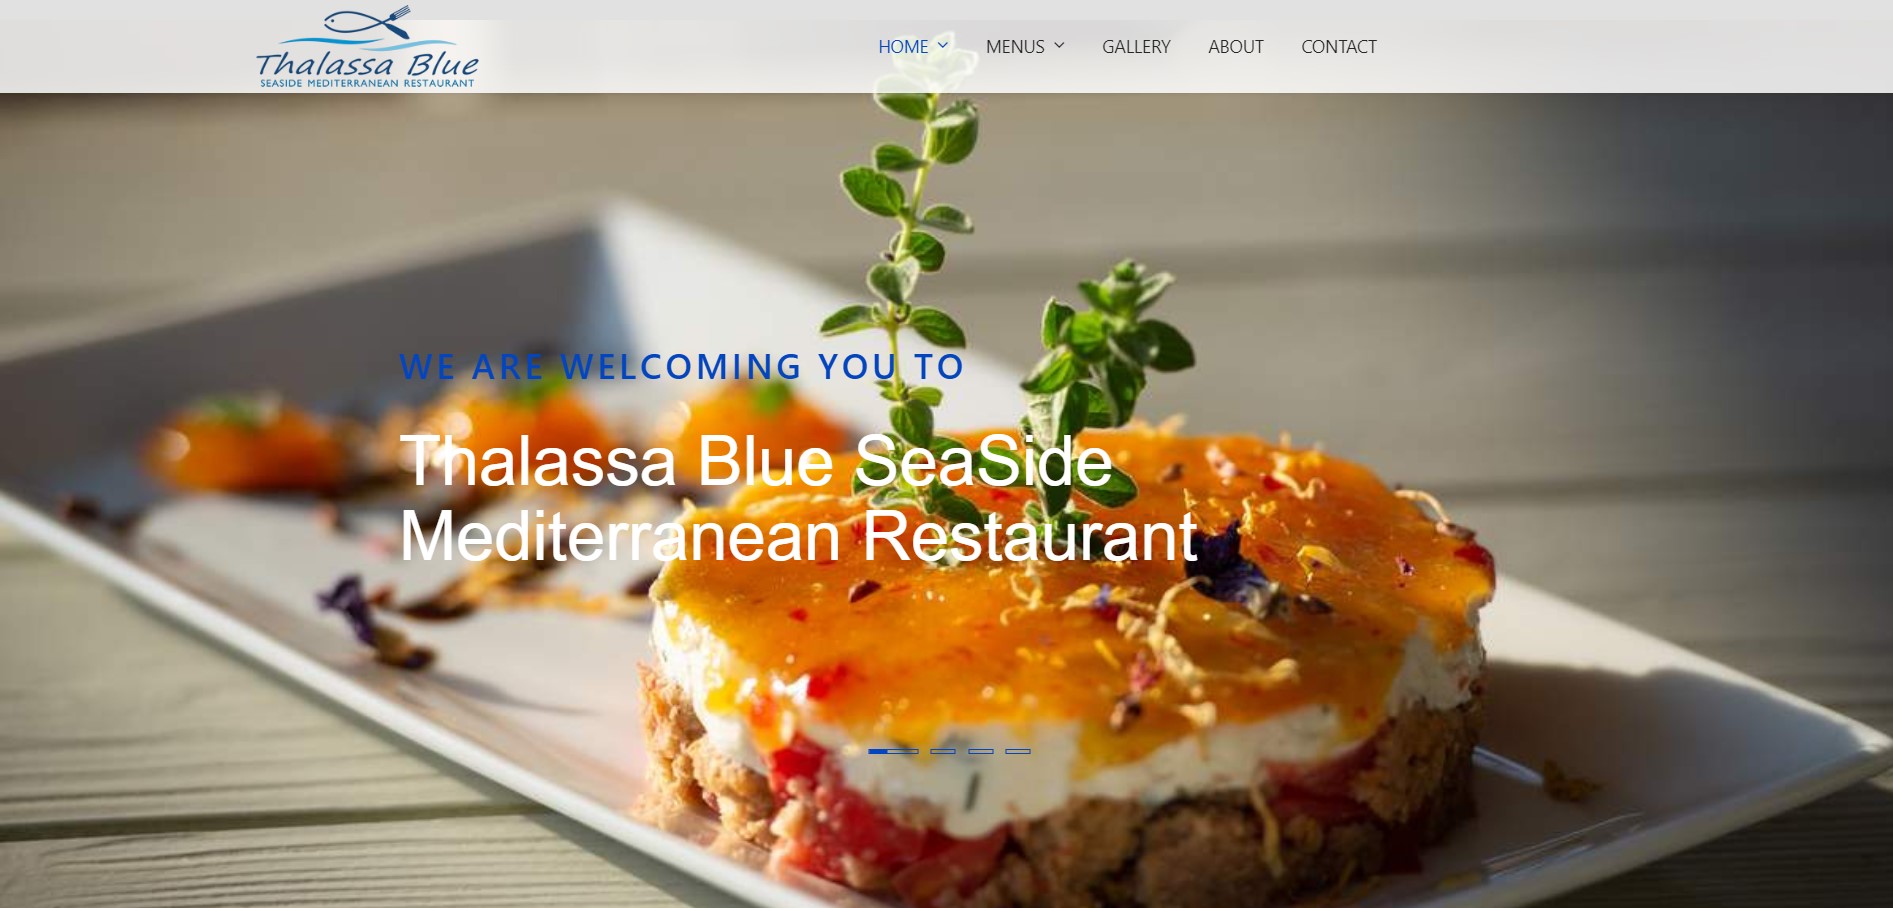 Thalassa Blue SeaSide Mediterranean Restaurant